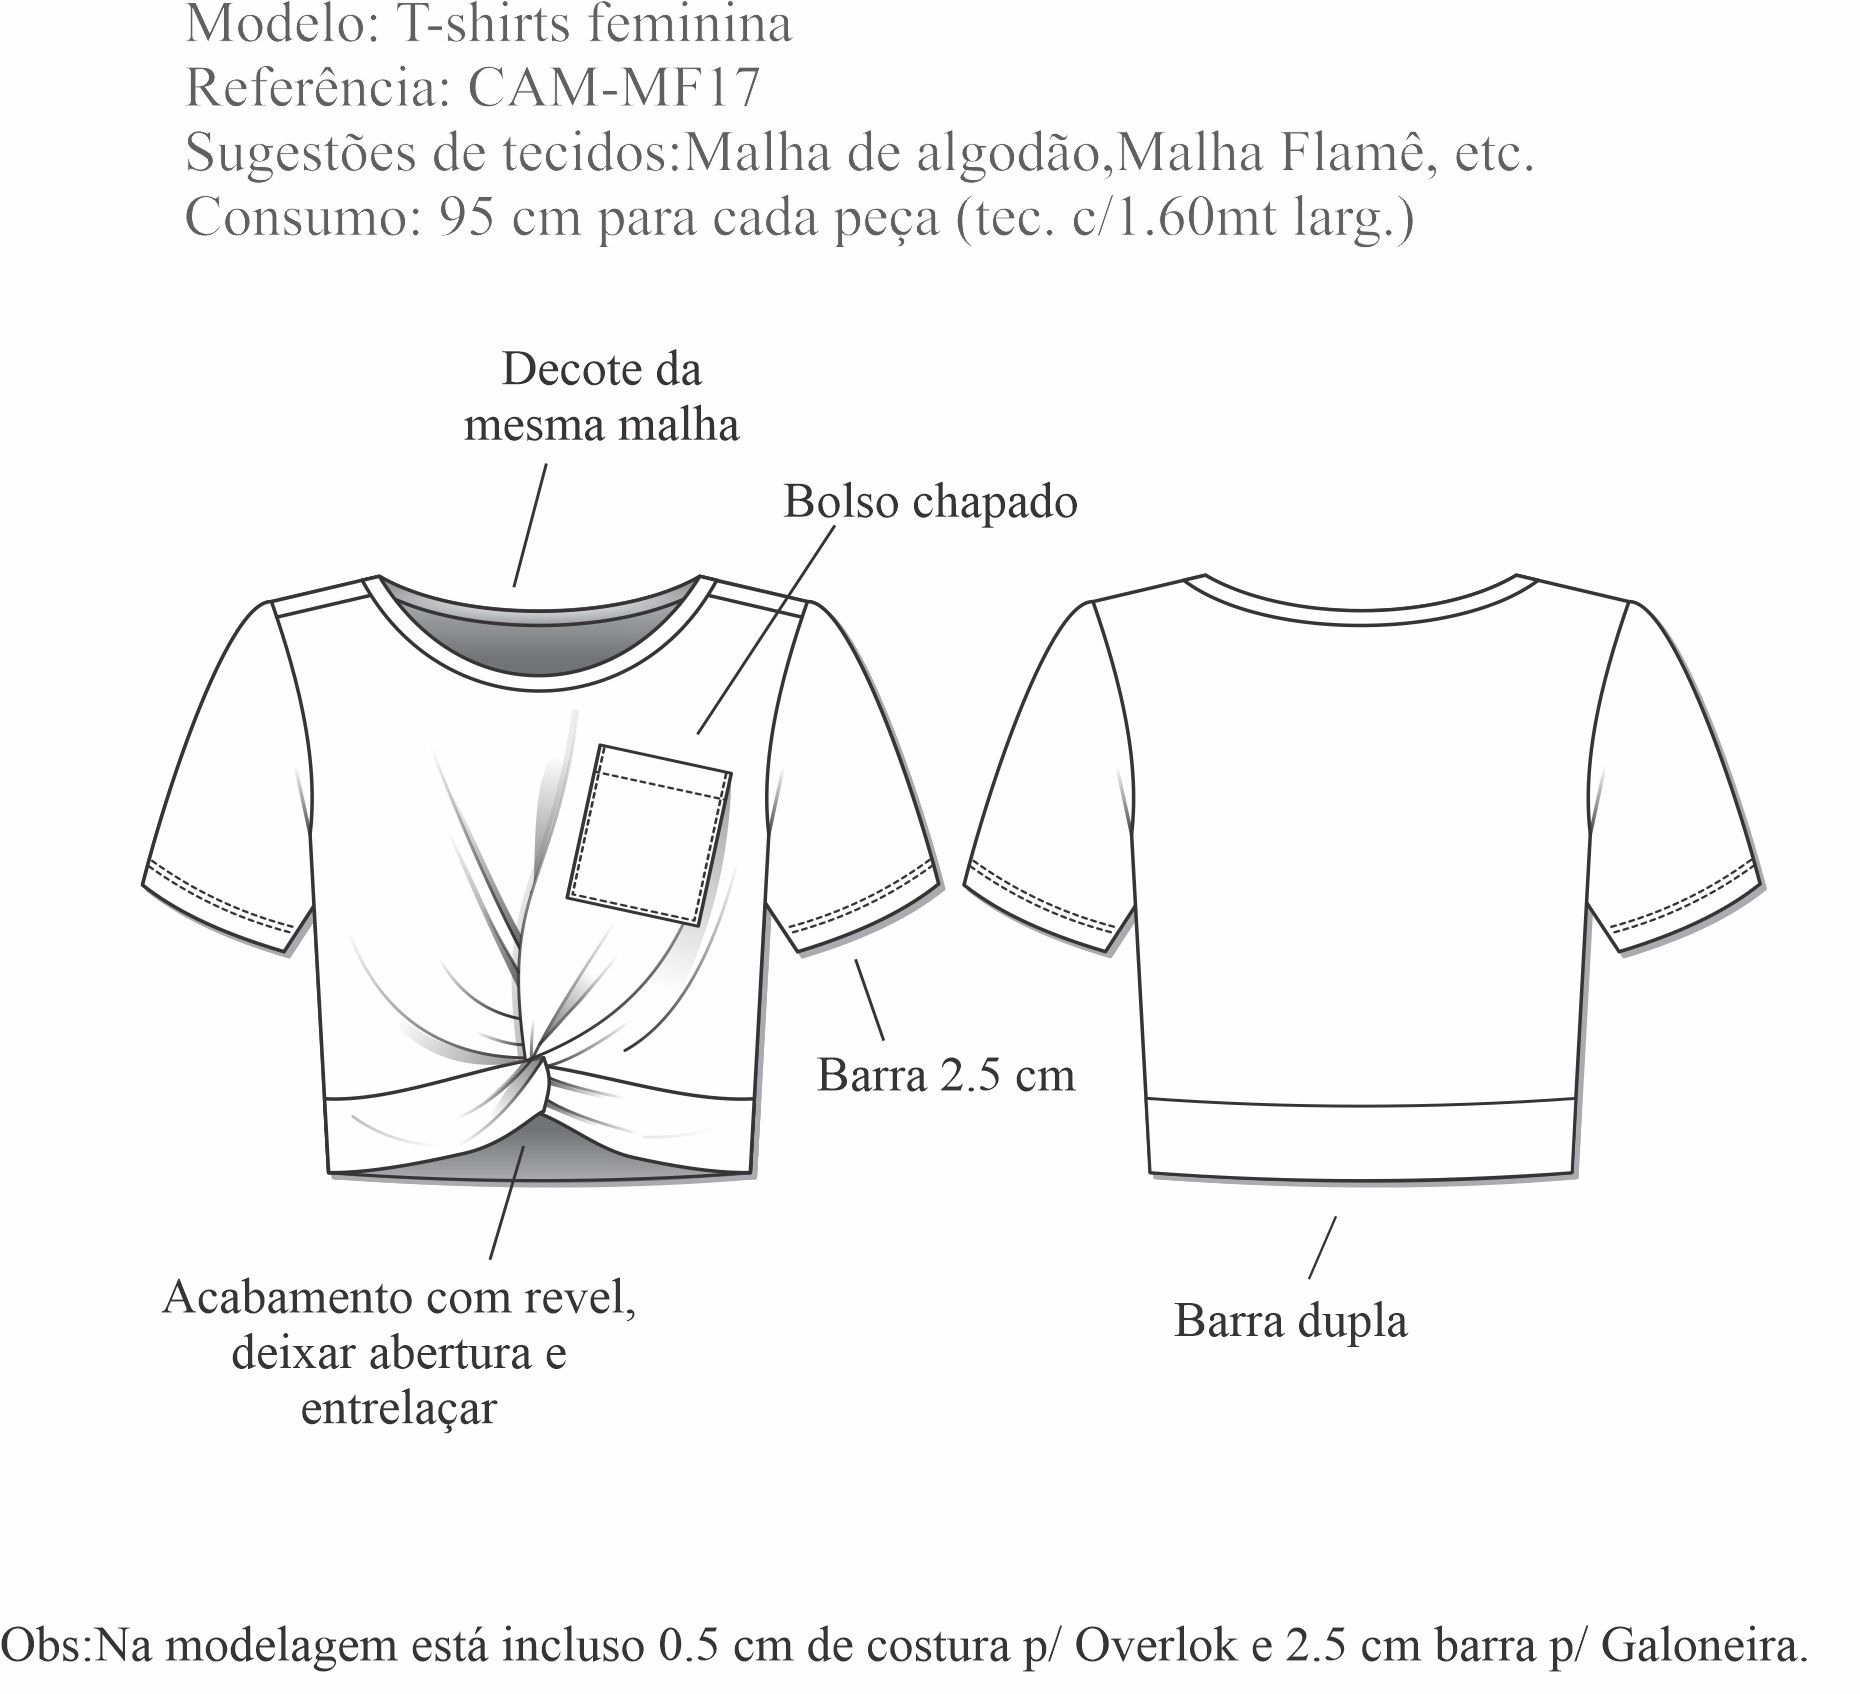 T-shirts Feminina (CAM-MF17) - Foto 1